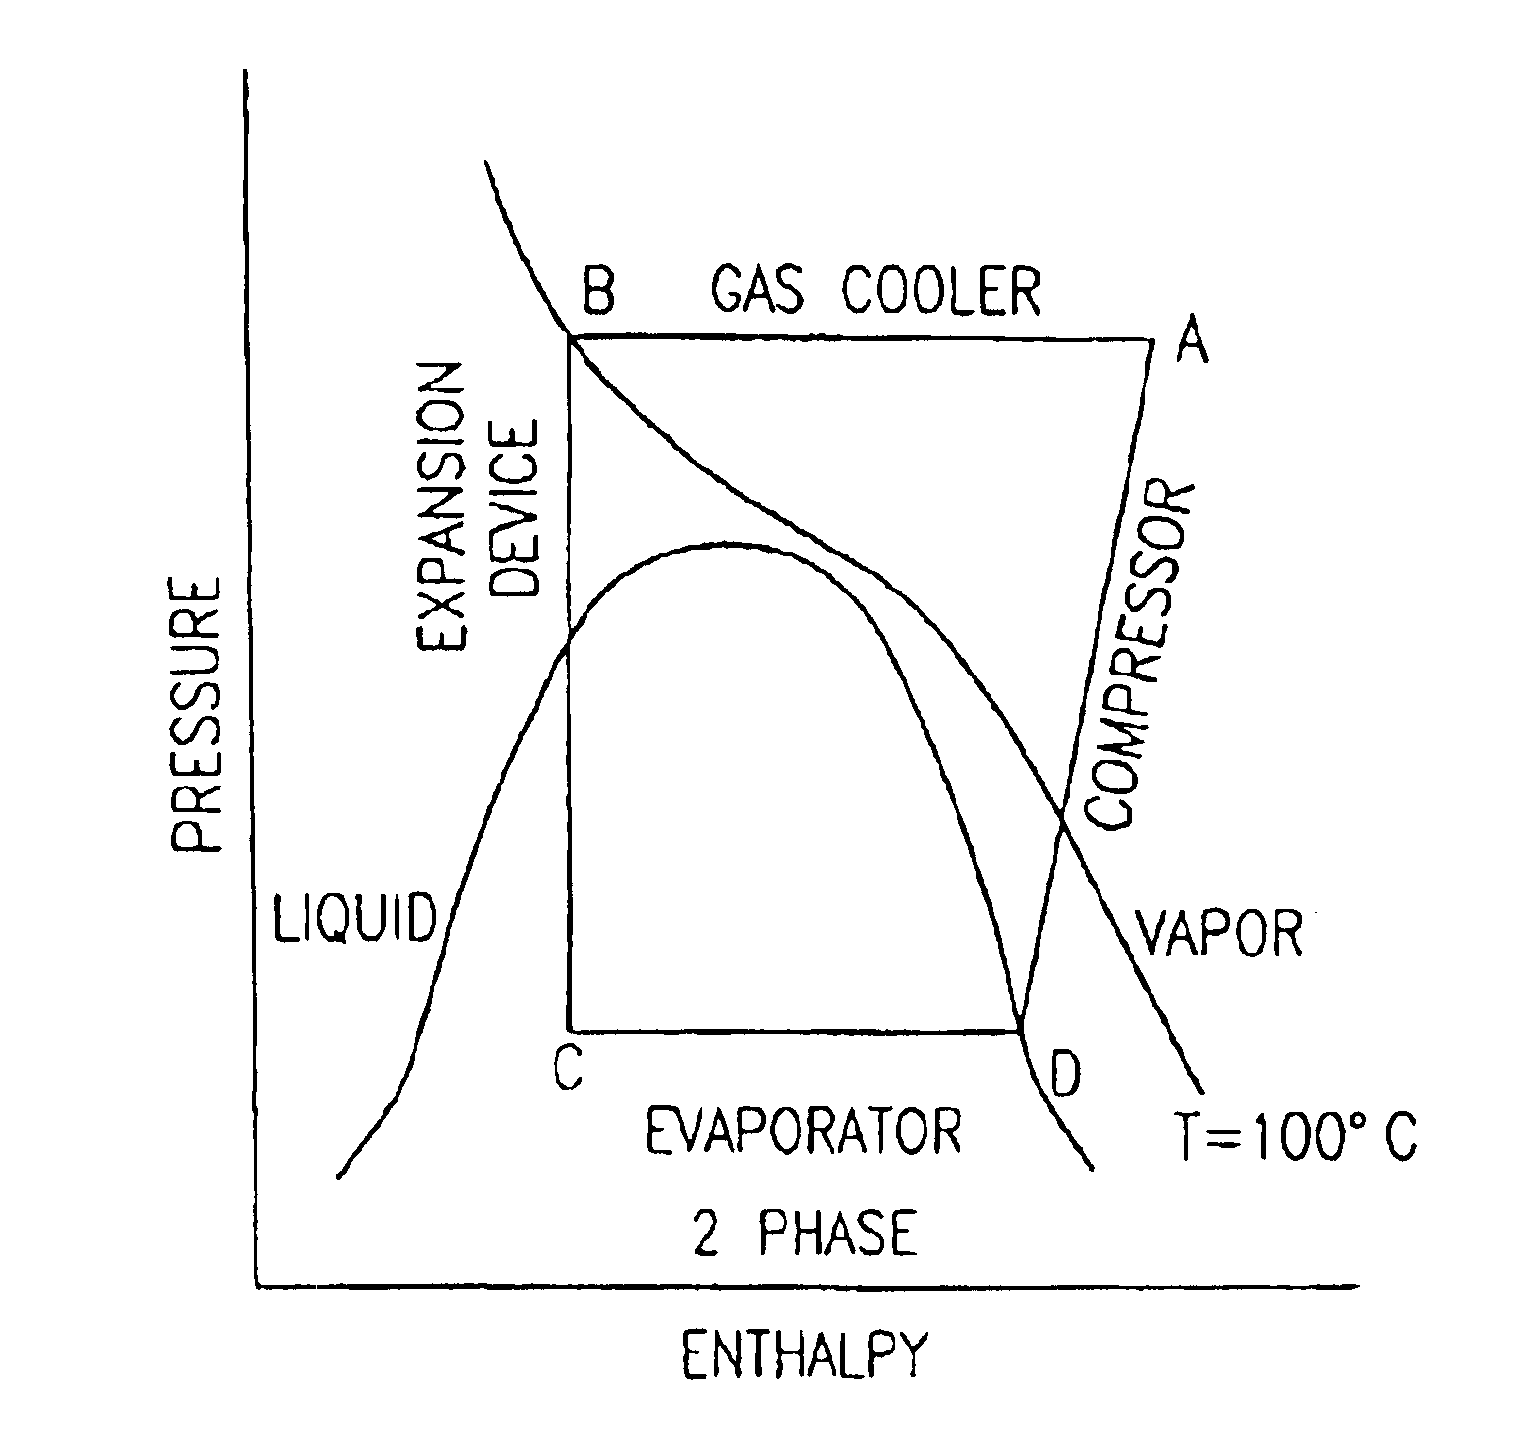 Supercritical pressure regulation of vapor compression system by regulation of expansion machine flowrate